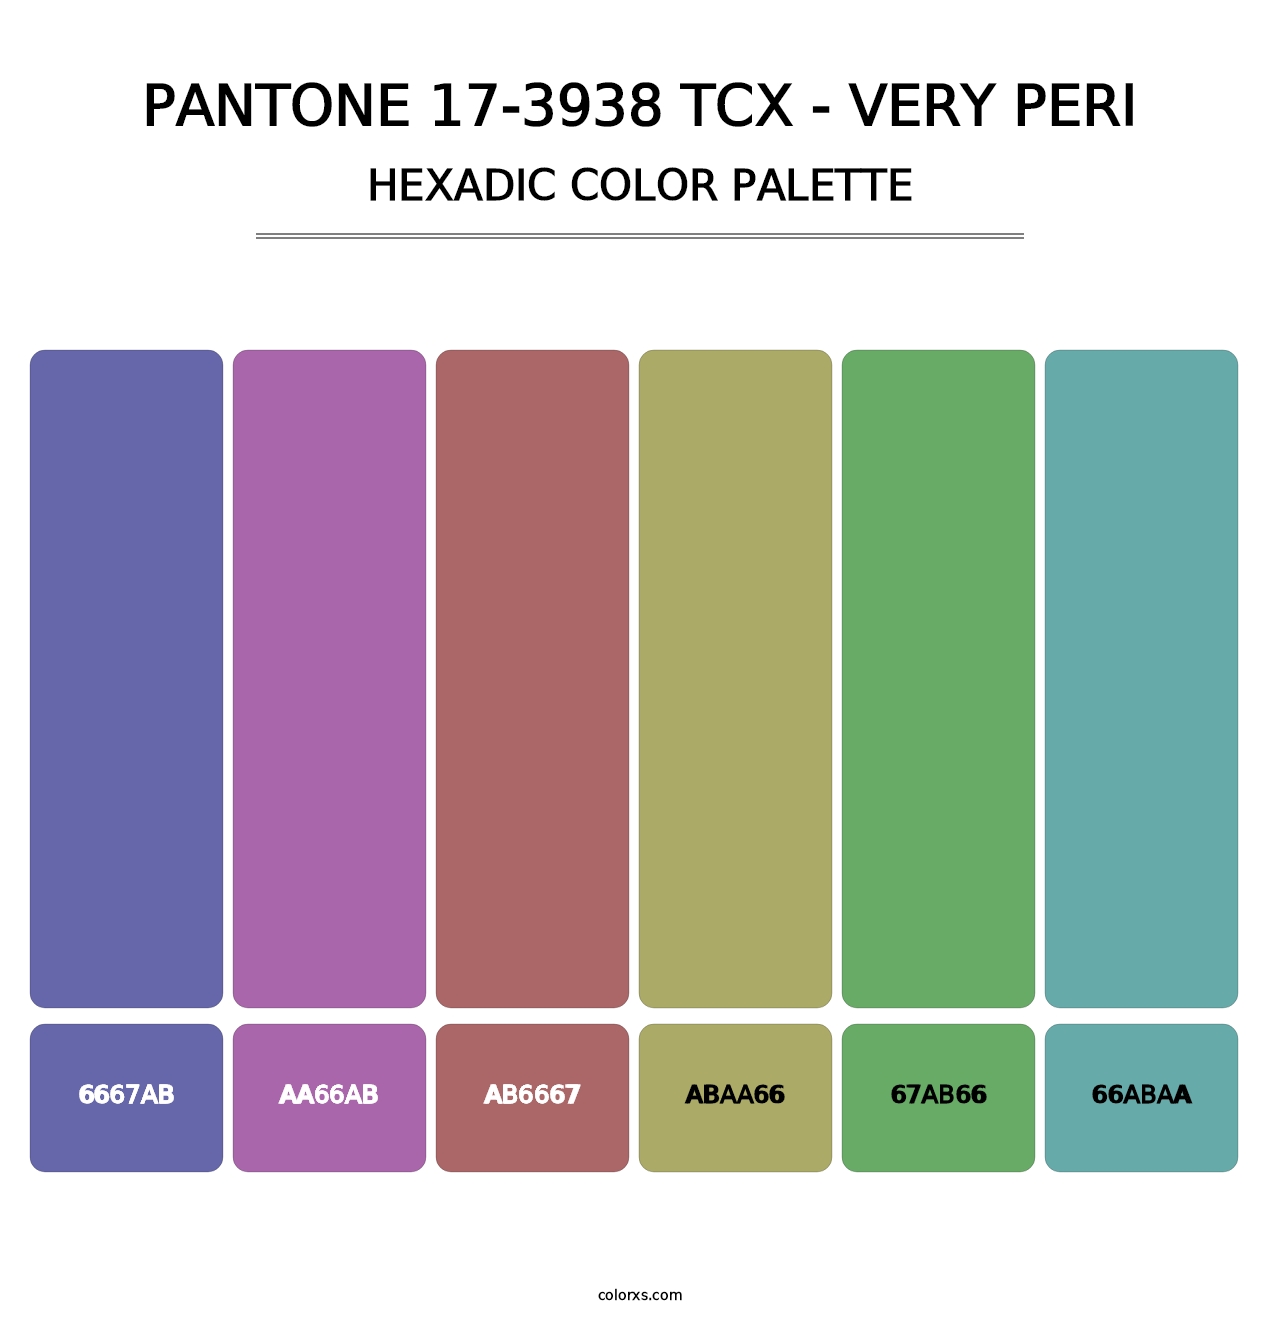 PANTONE 17-3938 TCX - Very Peri - Hexadic Color Palette